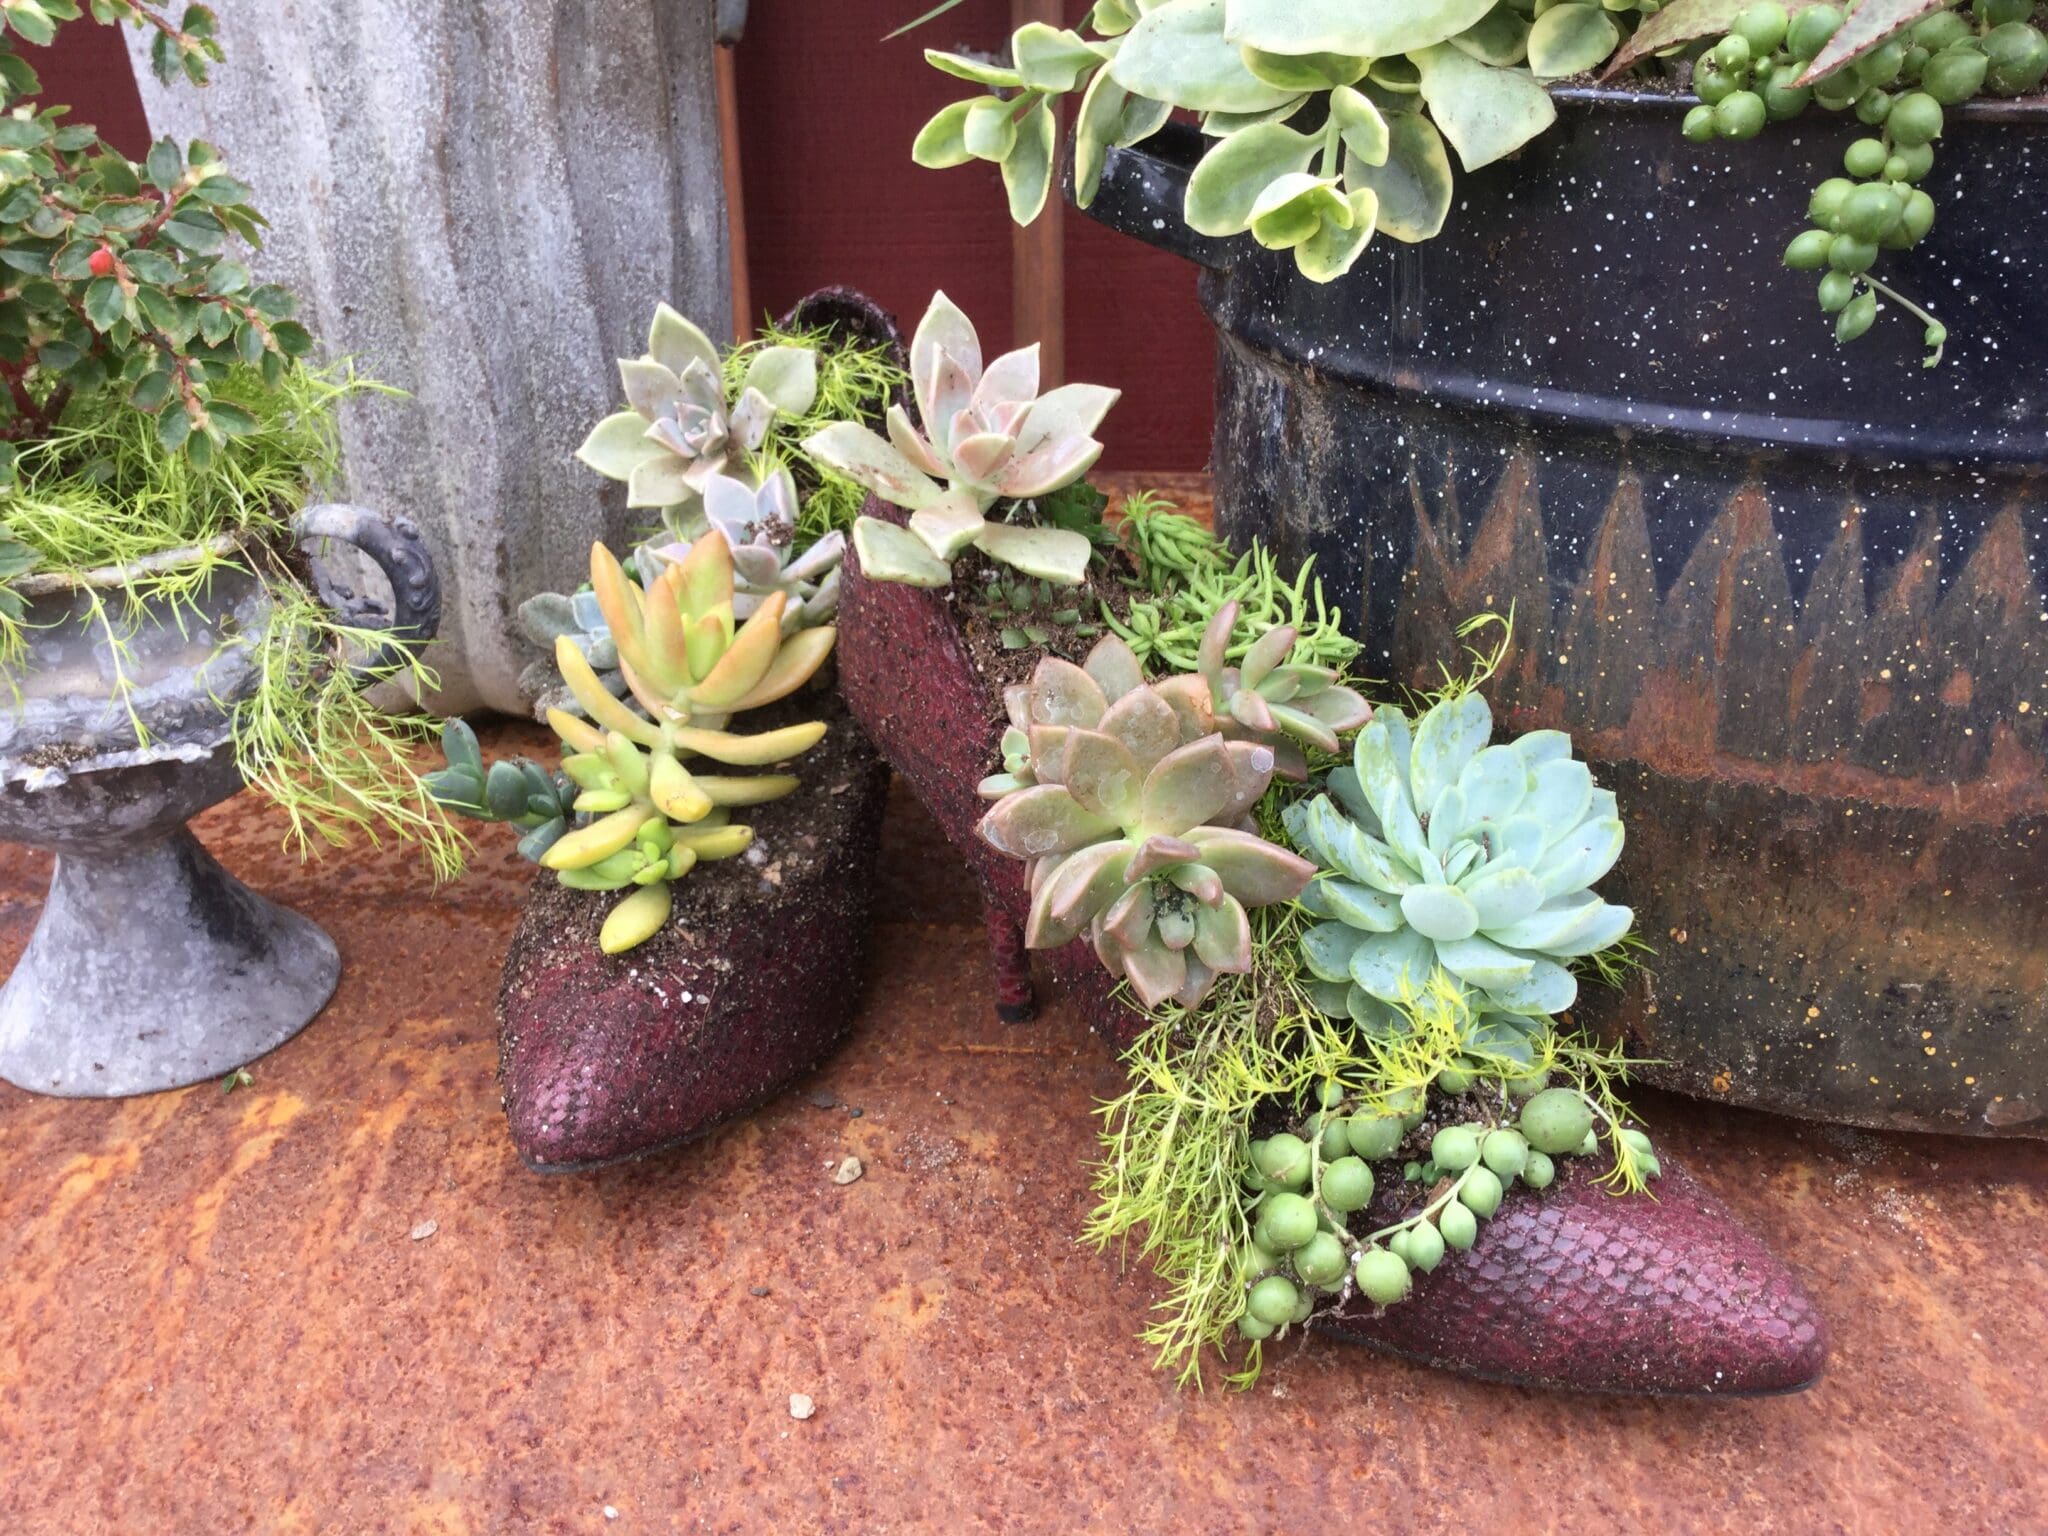 Succulent plants in small pots